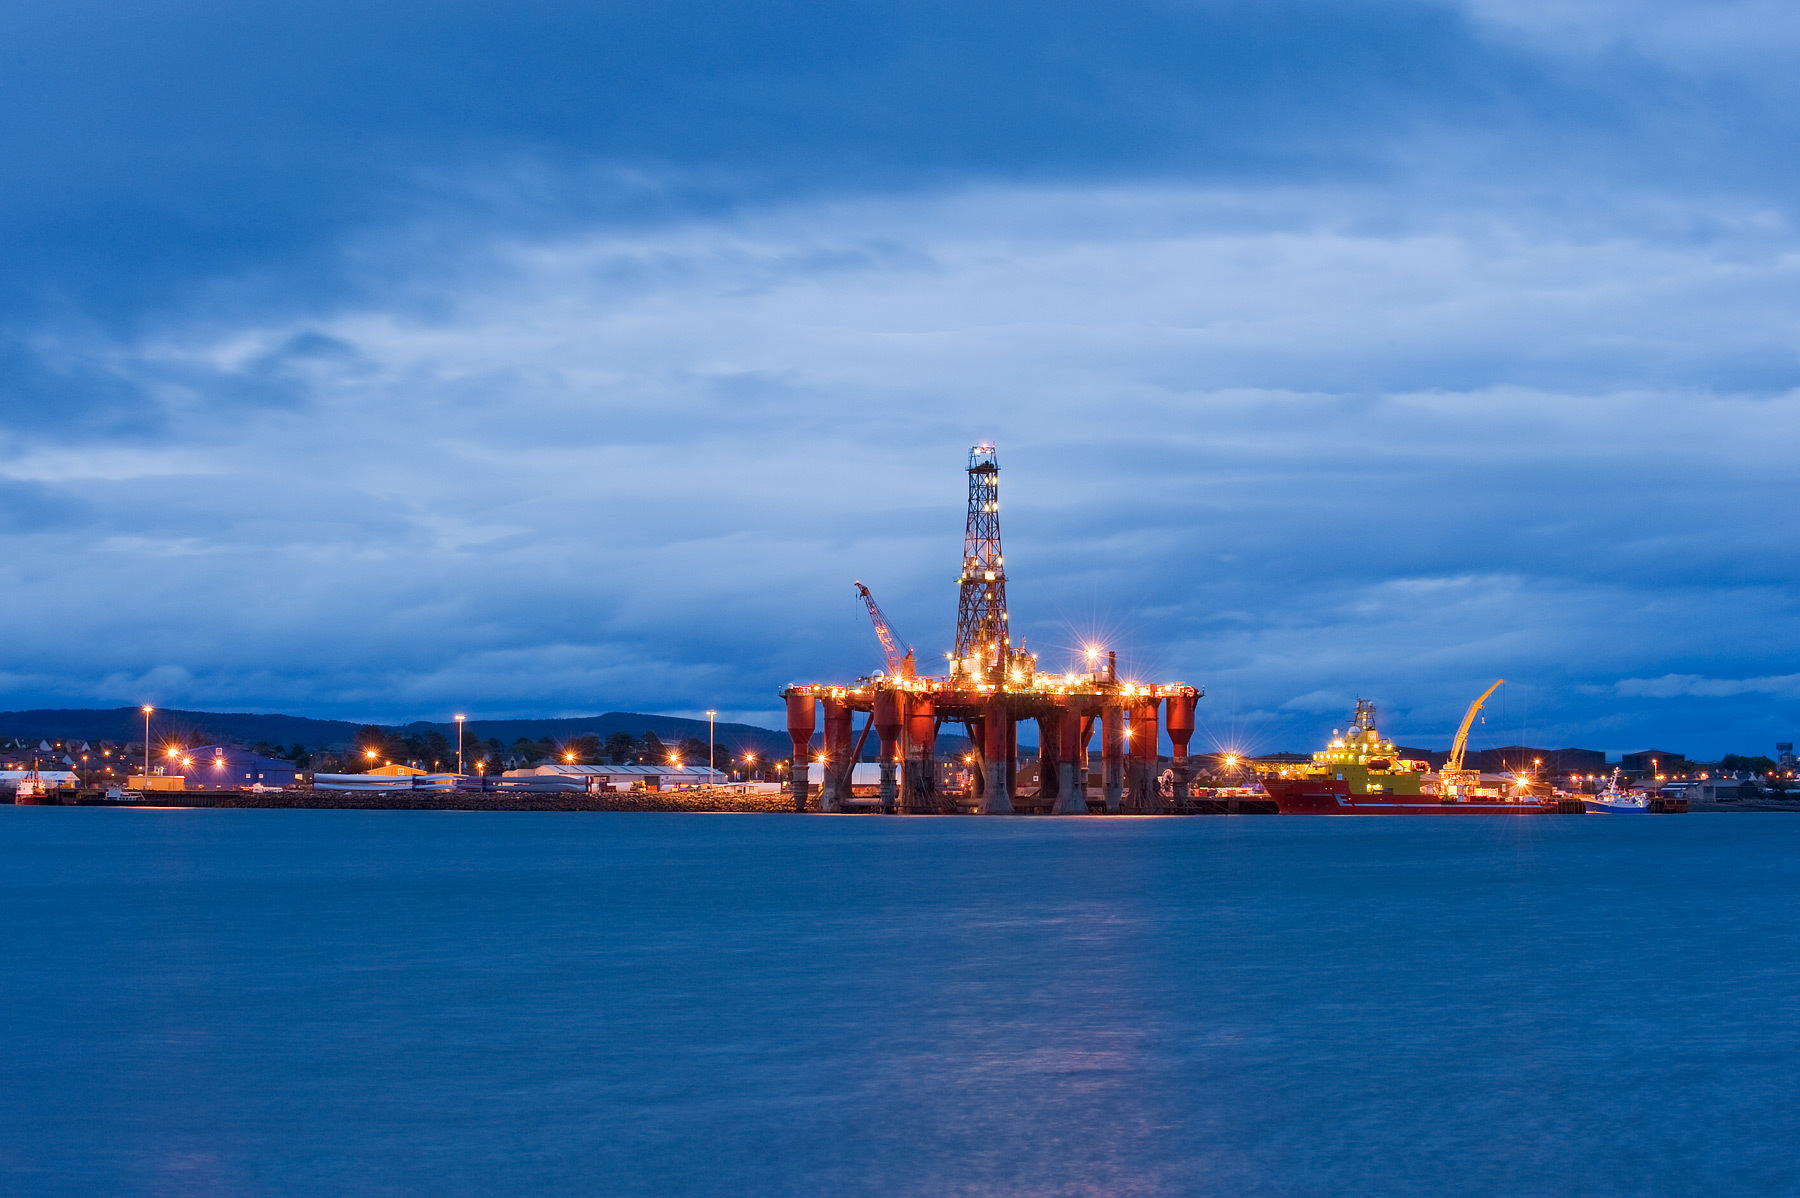 Oil rigs, North Sea oil, Scotland, UK | Center for International Environmental Law